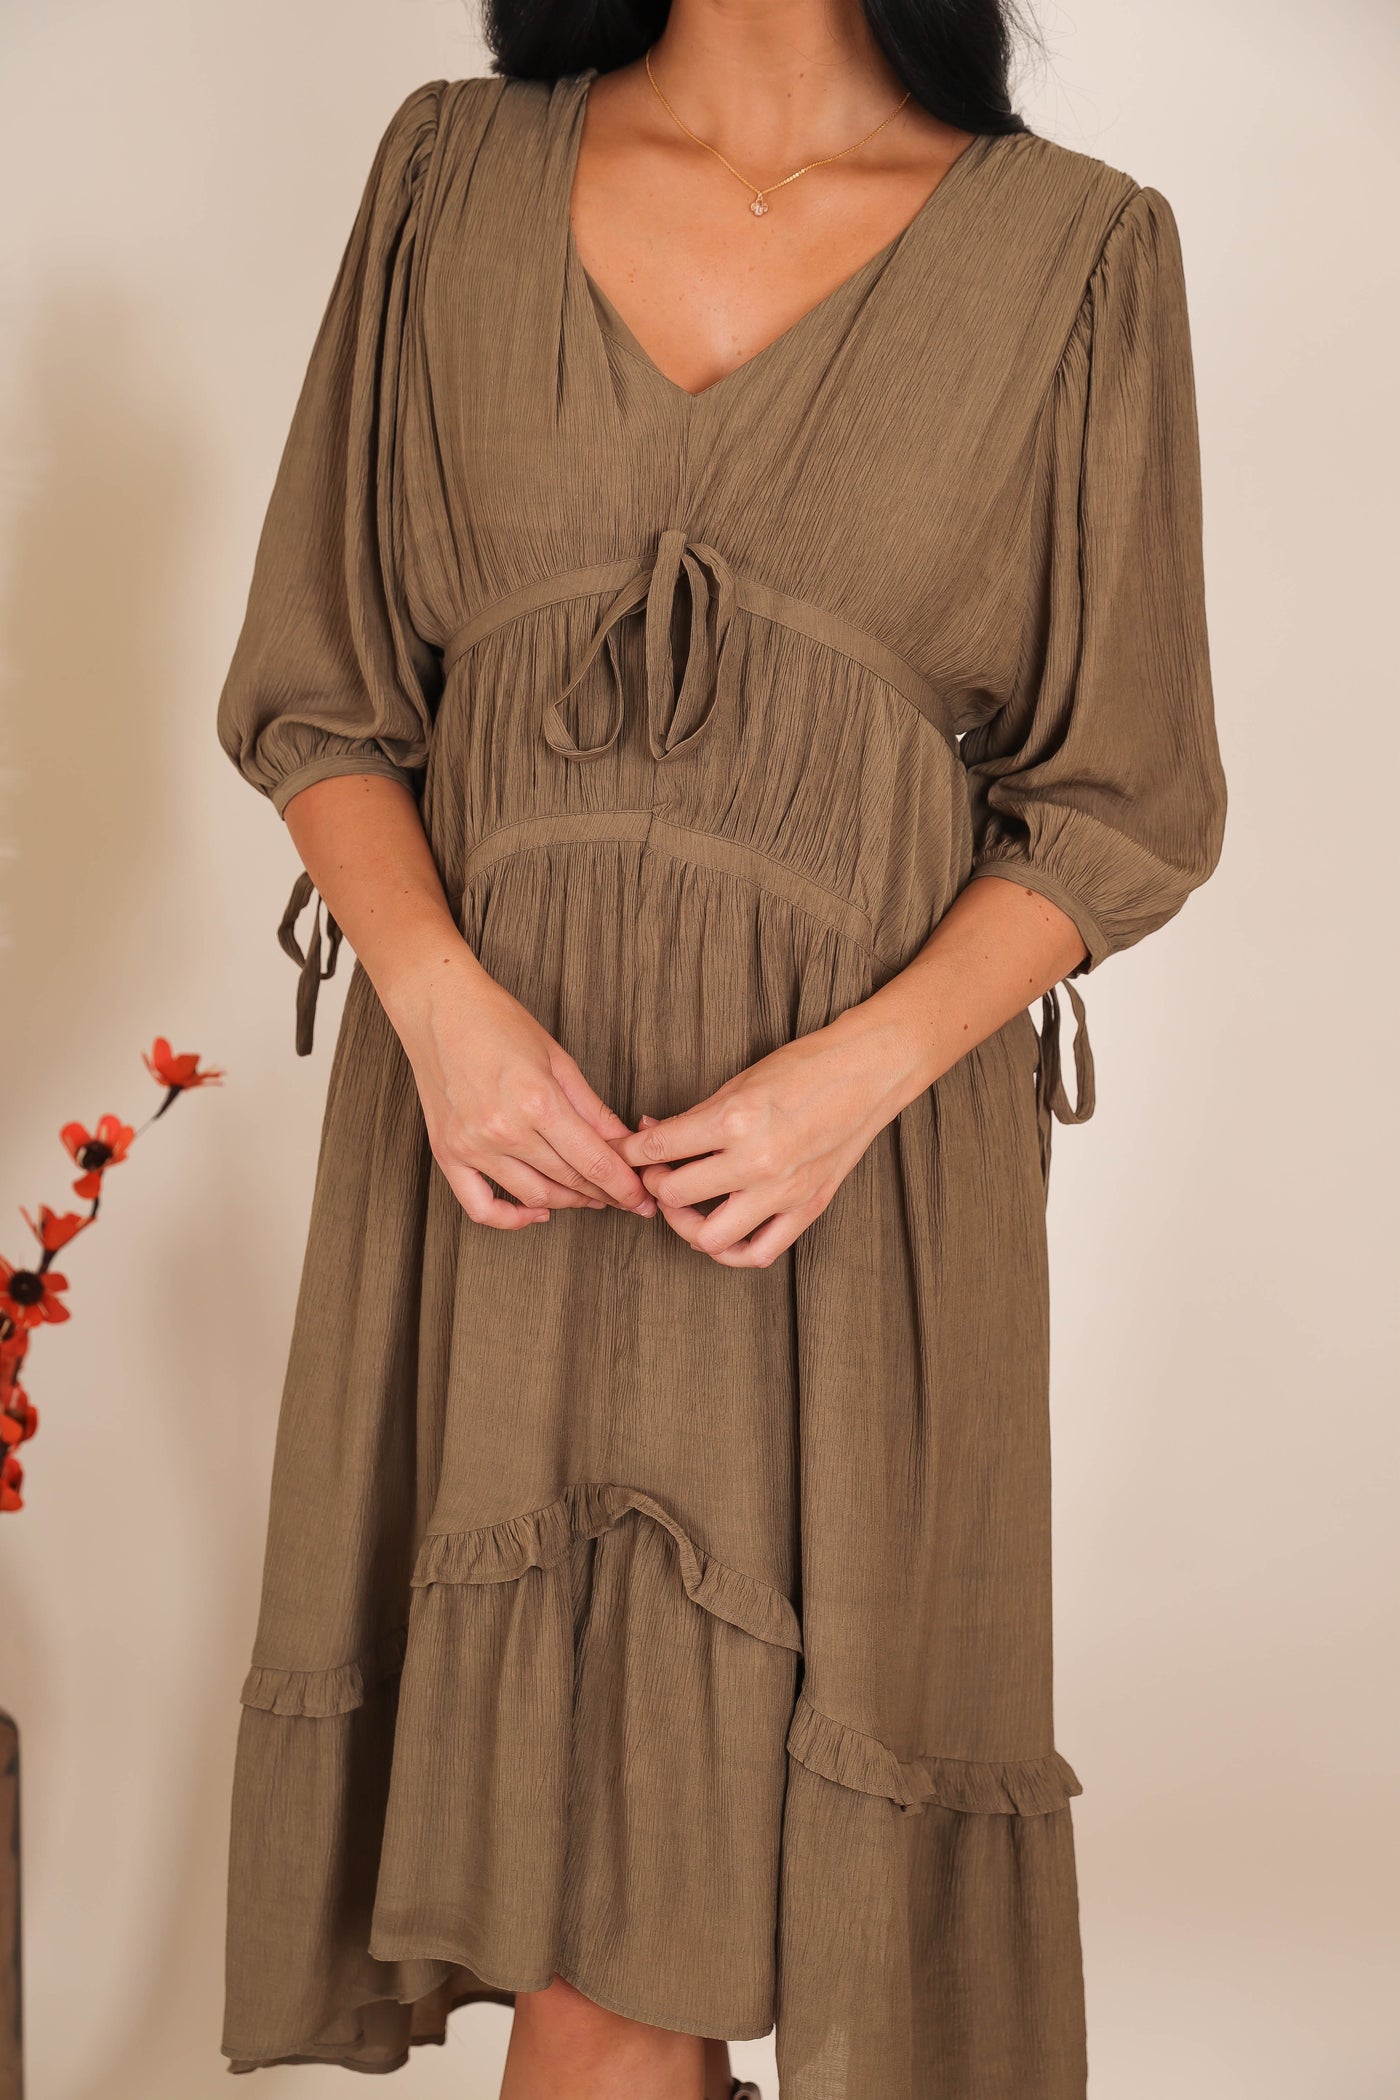 Olive Green Midi Dress- Feminine Midi Dresses- Cottage-Core Style Dresses- &Merci Midi Dress